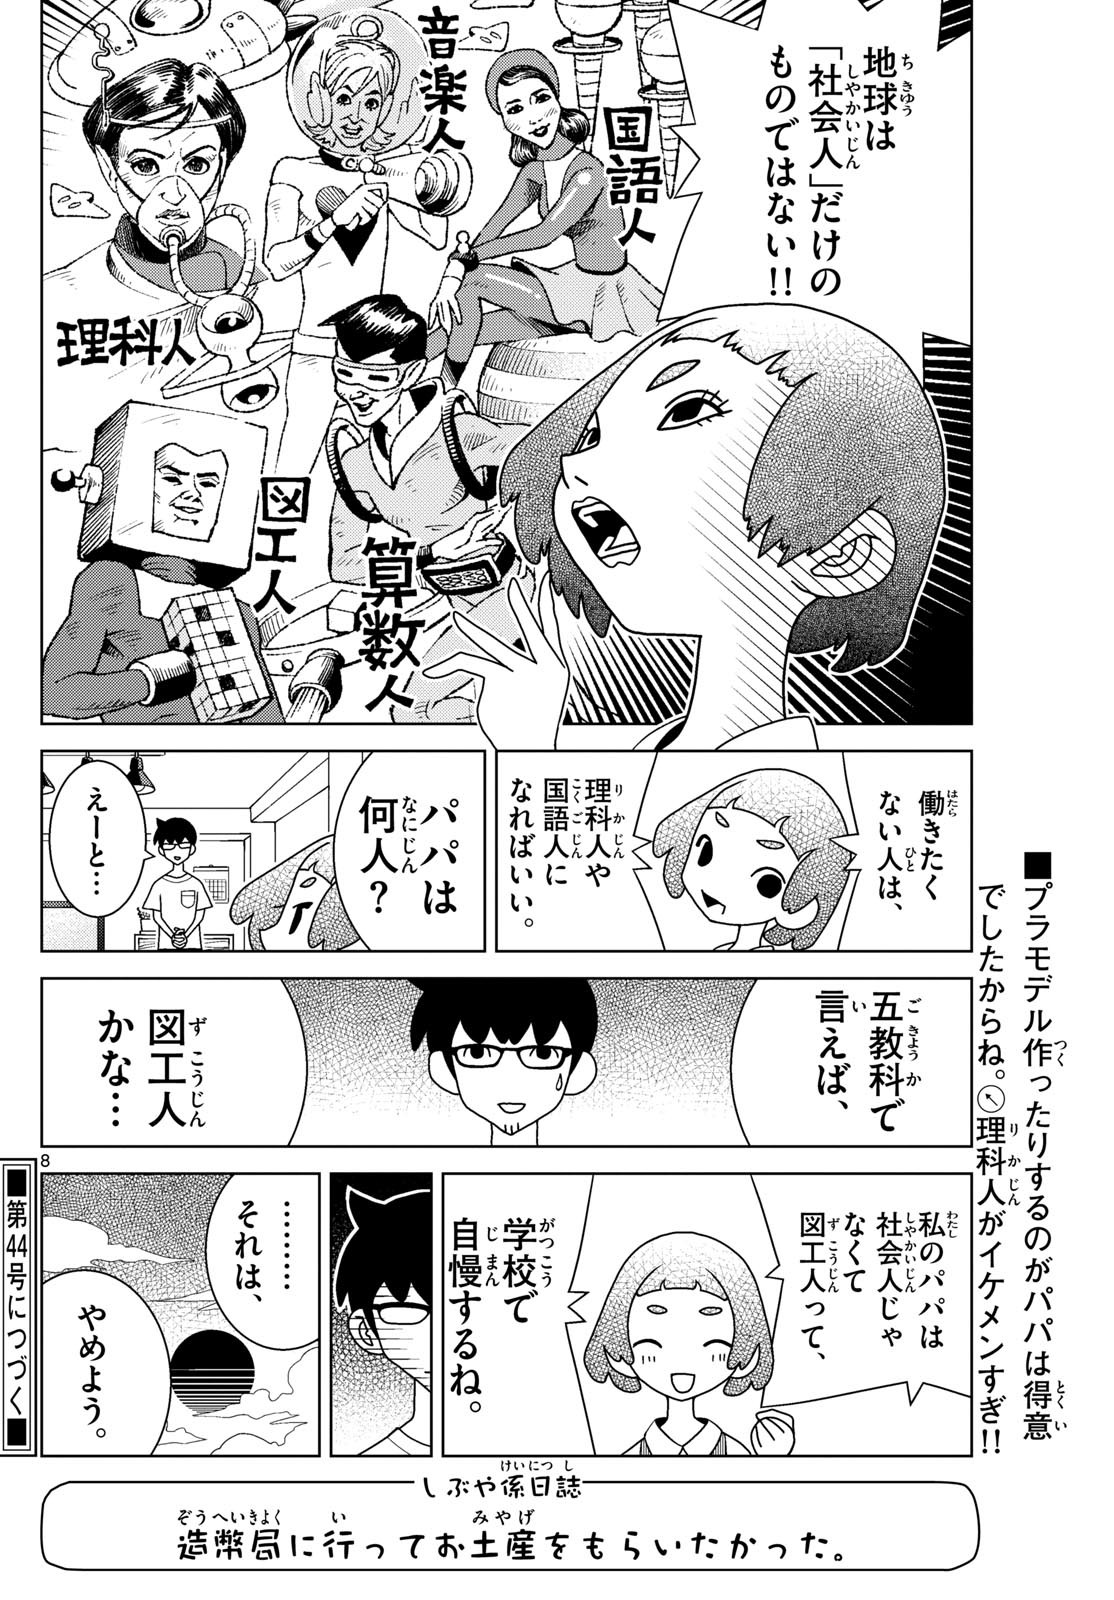 Shibuya Near Family - Chapter 072 - Page 8